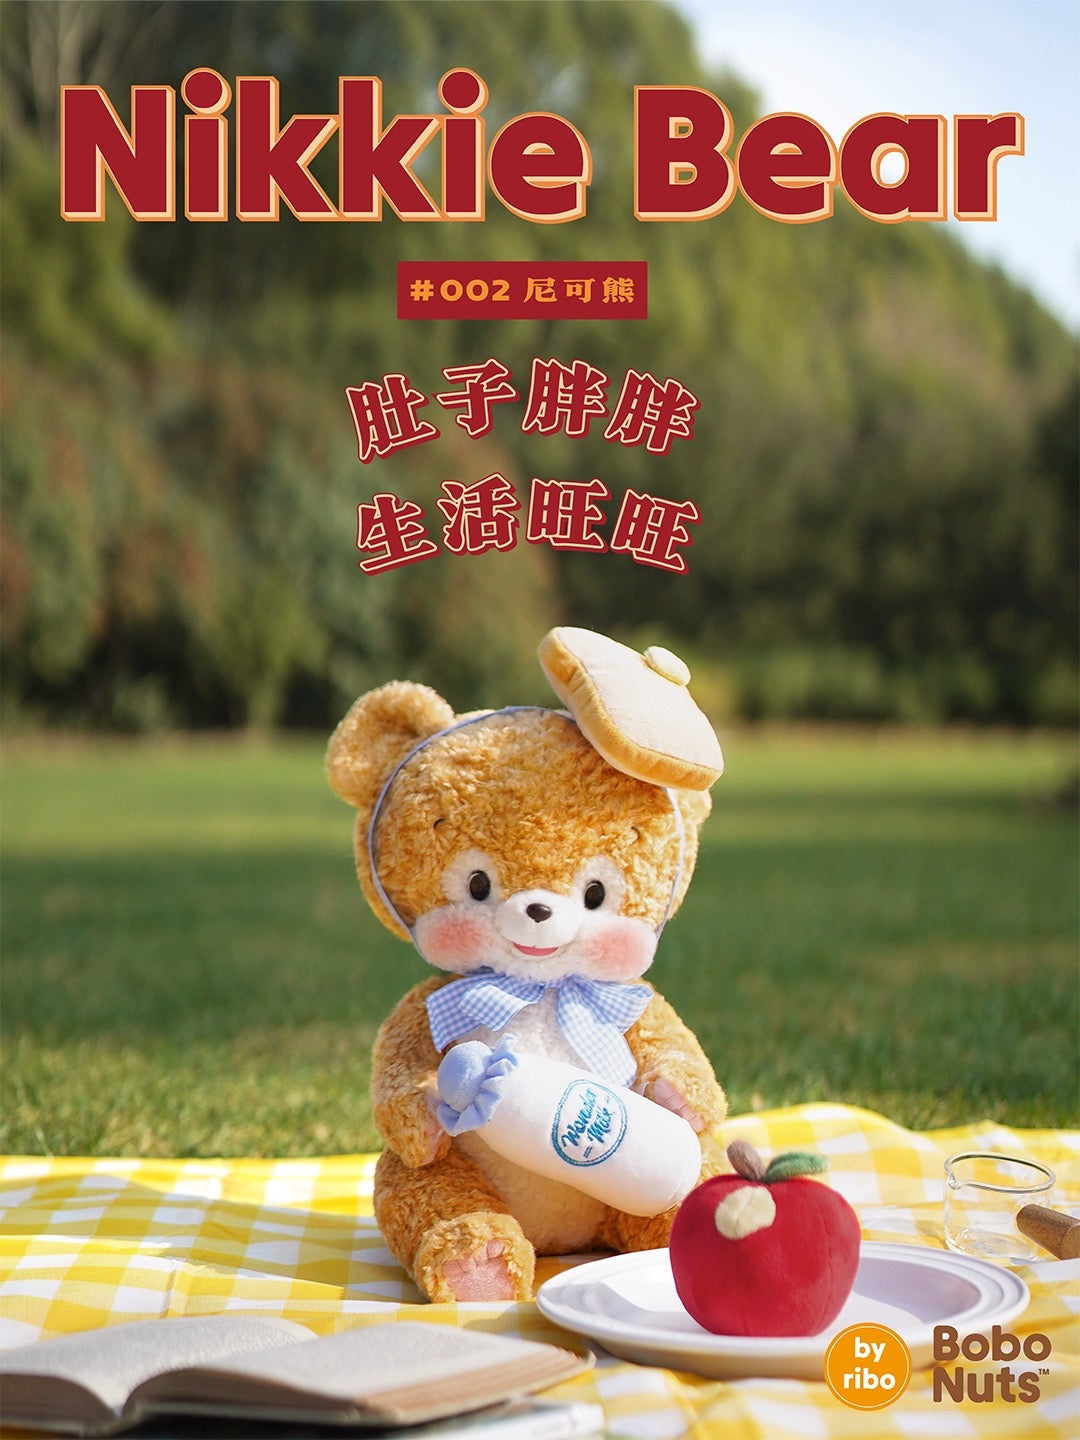 Japan Artist Ribo Breakfast Club | Nikkie Bear - Plush Doll Vintage Style Rare